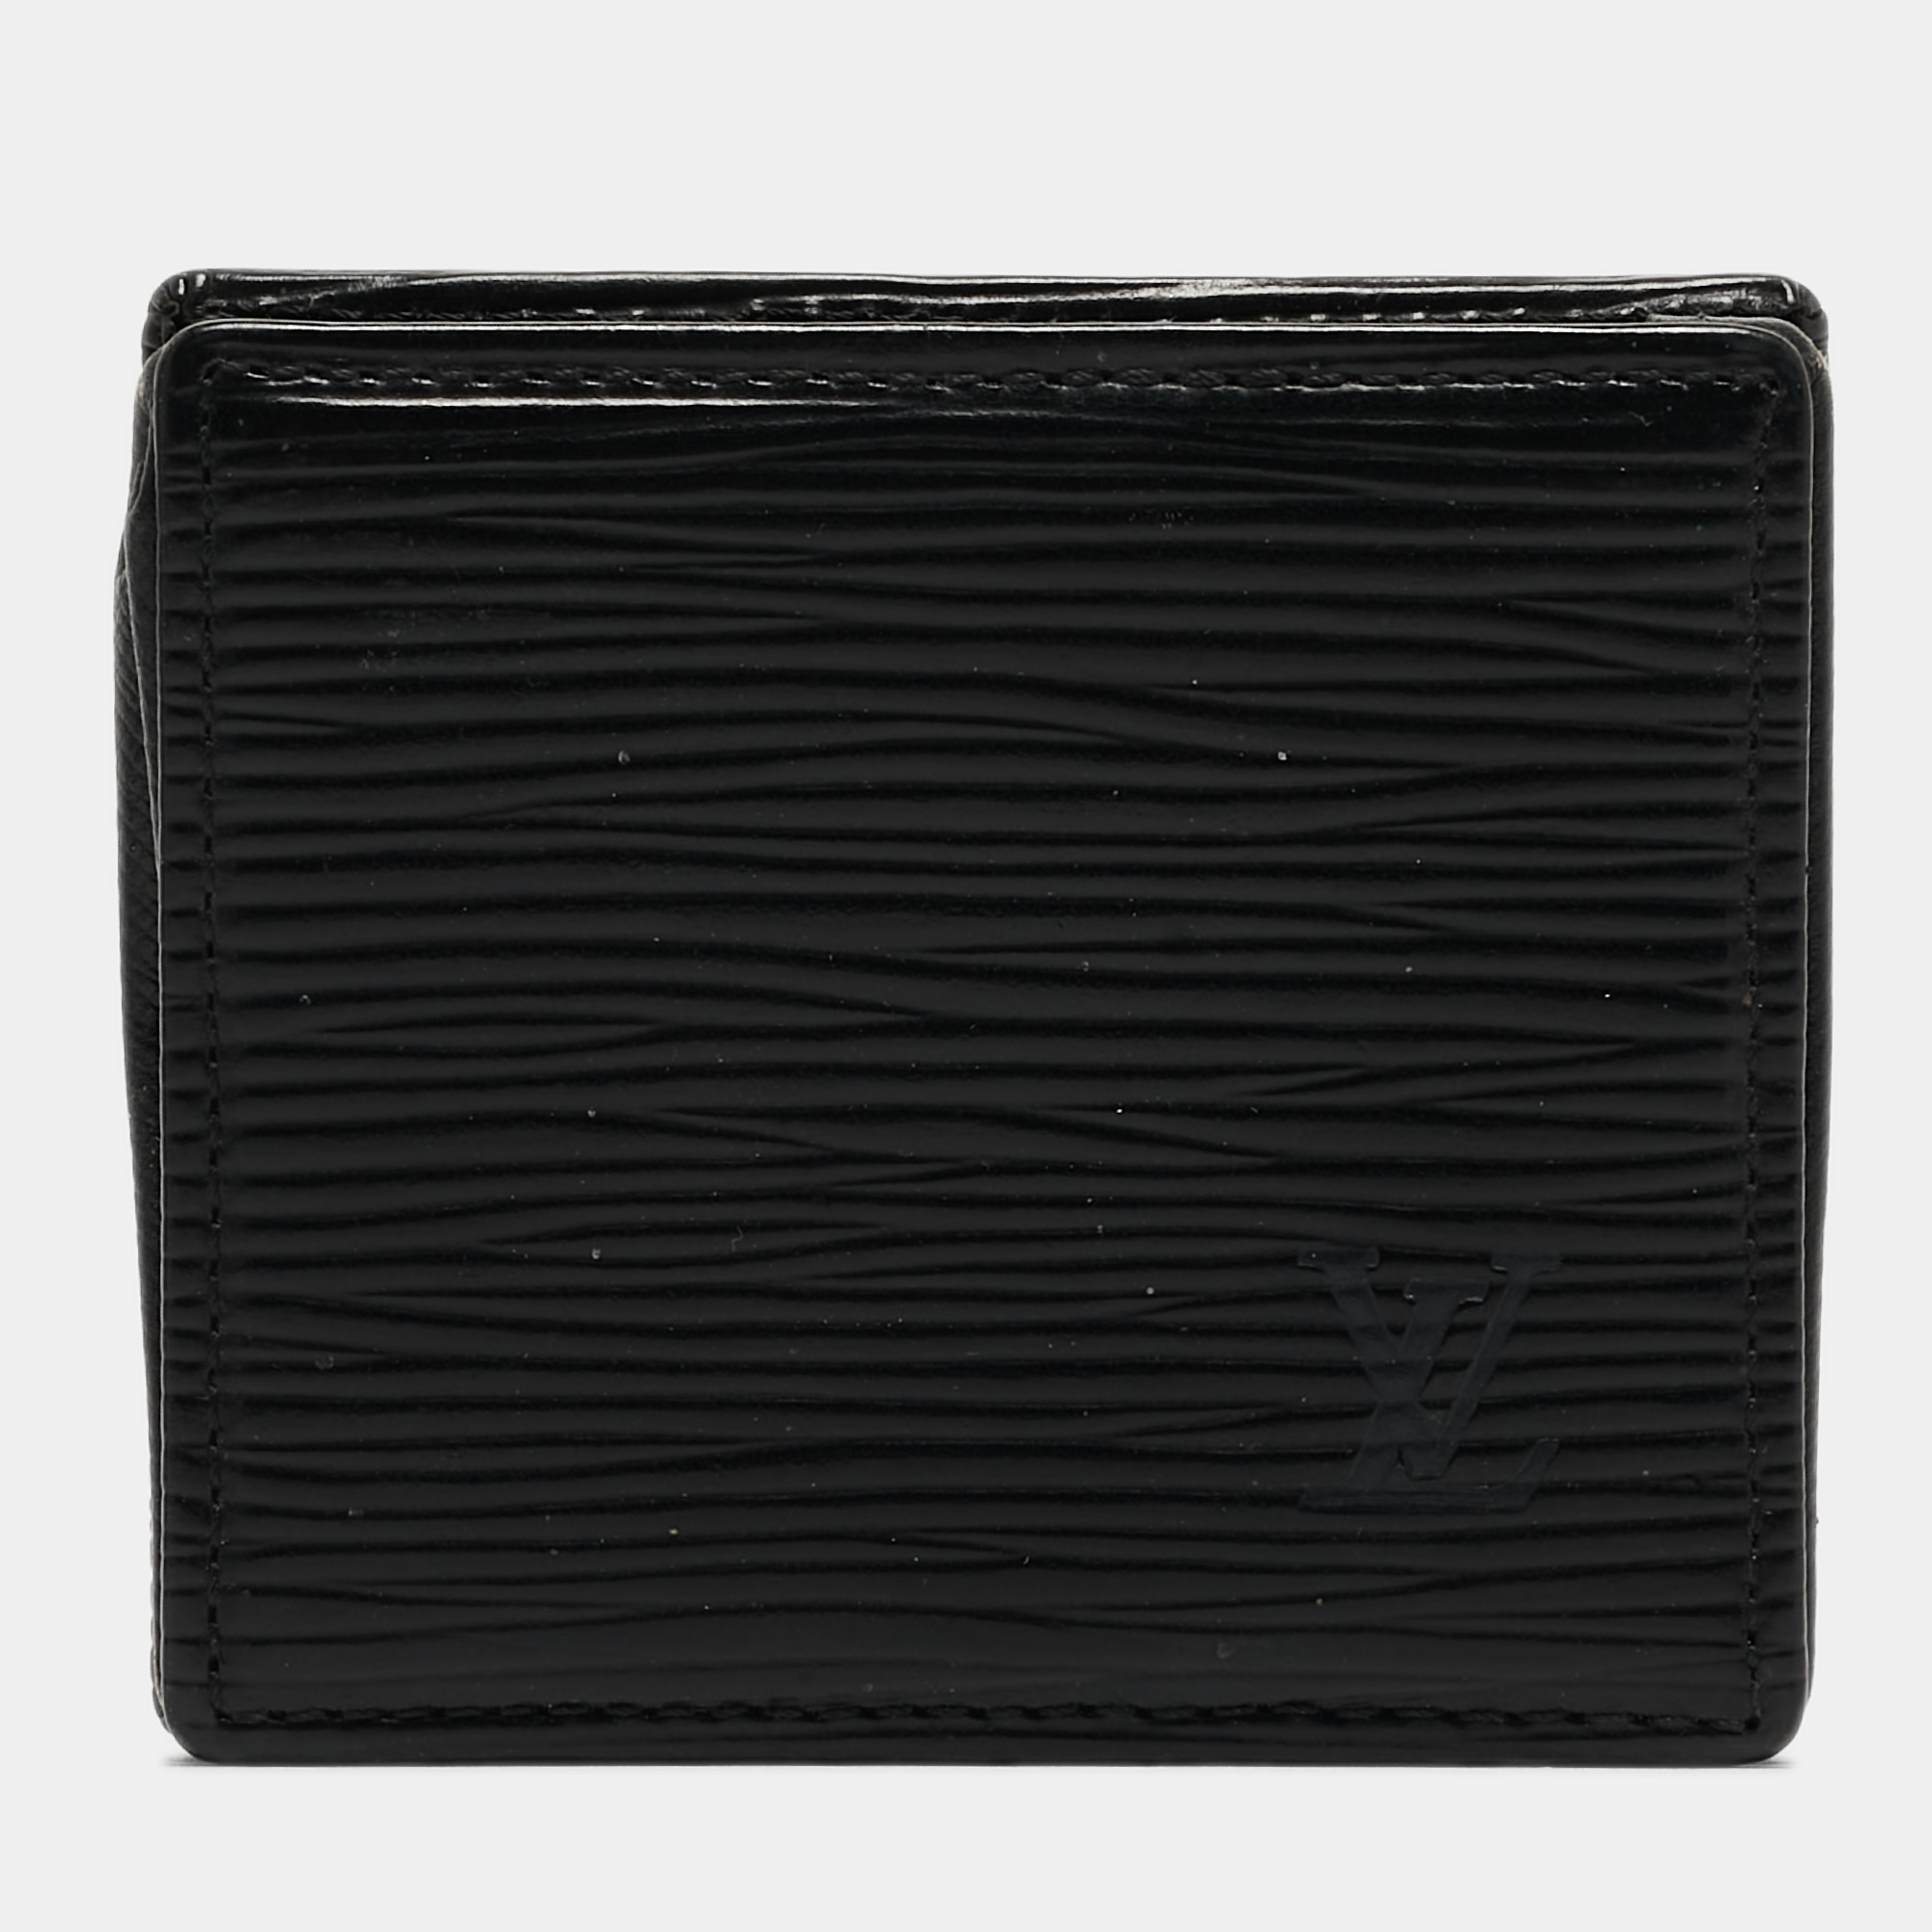 Louis vuitton black epi leather porte-monnaie boite coin purse